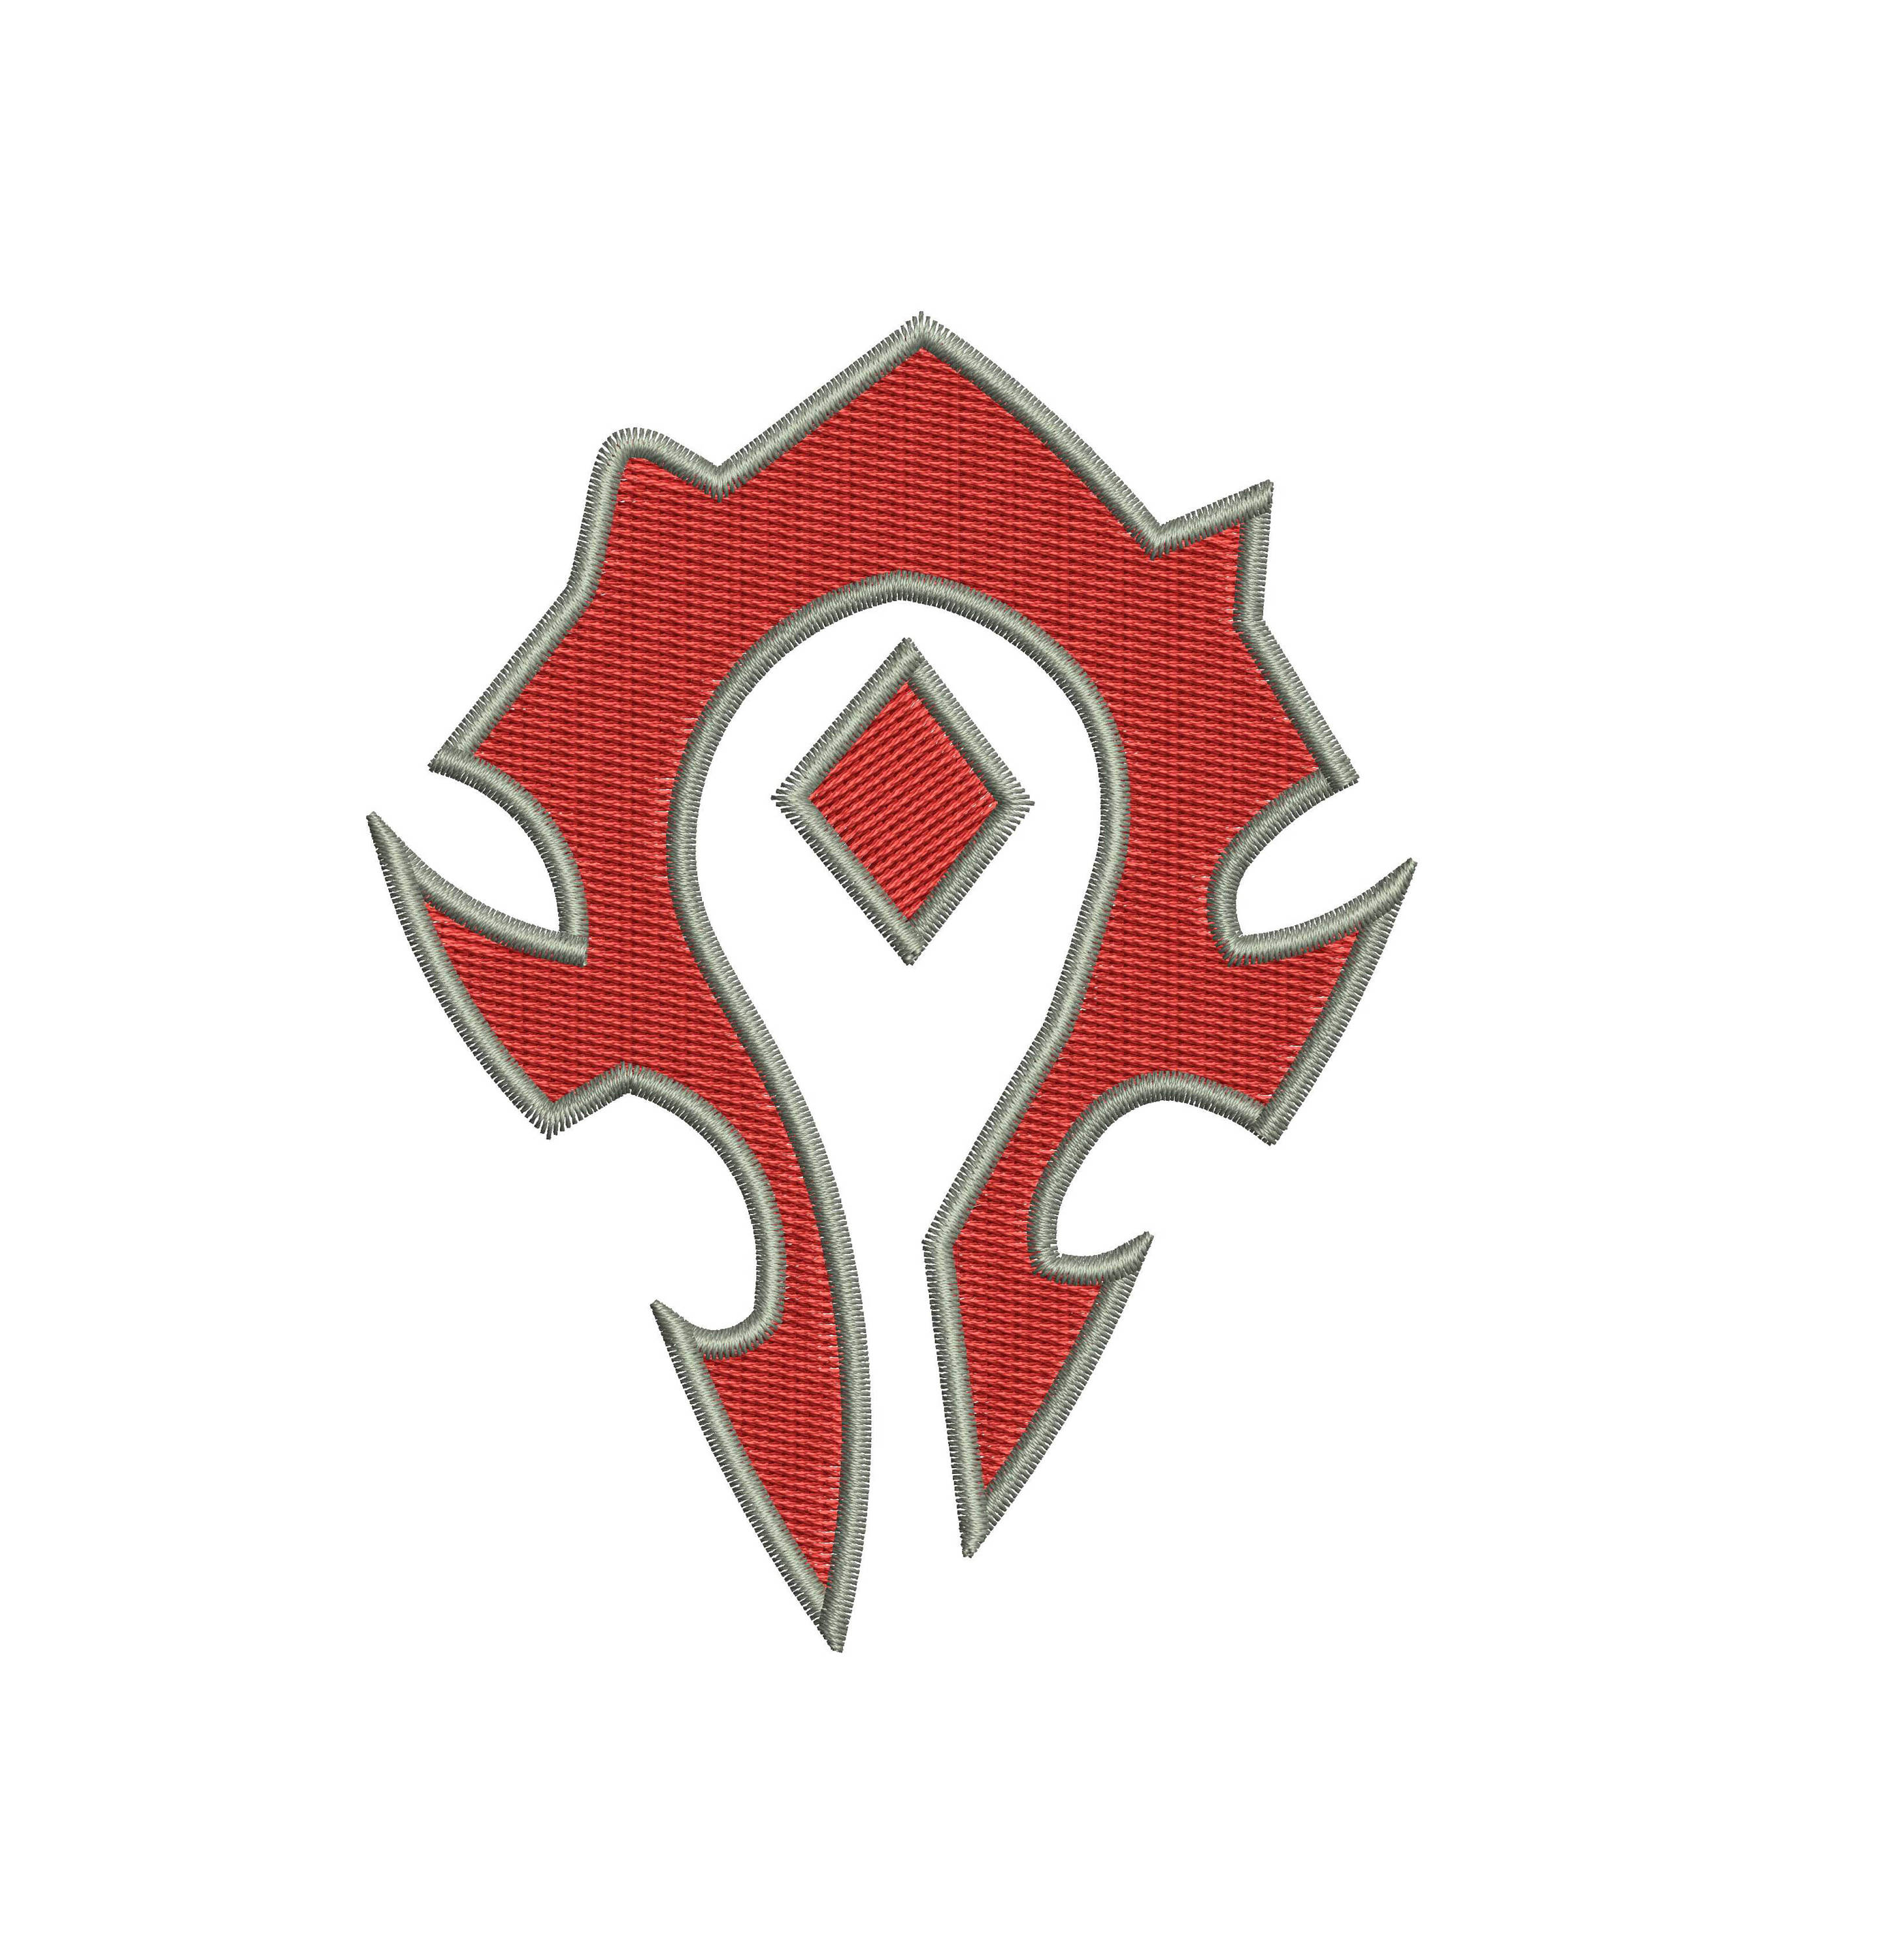 Horde symbol of World of Warcraft: Machine embroidery design